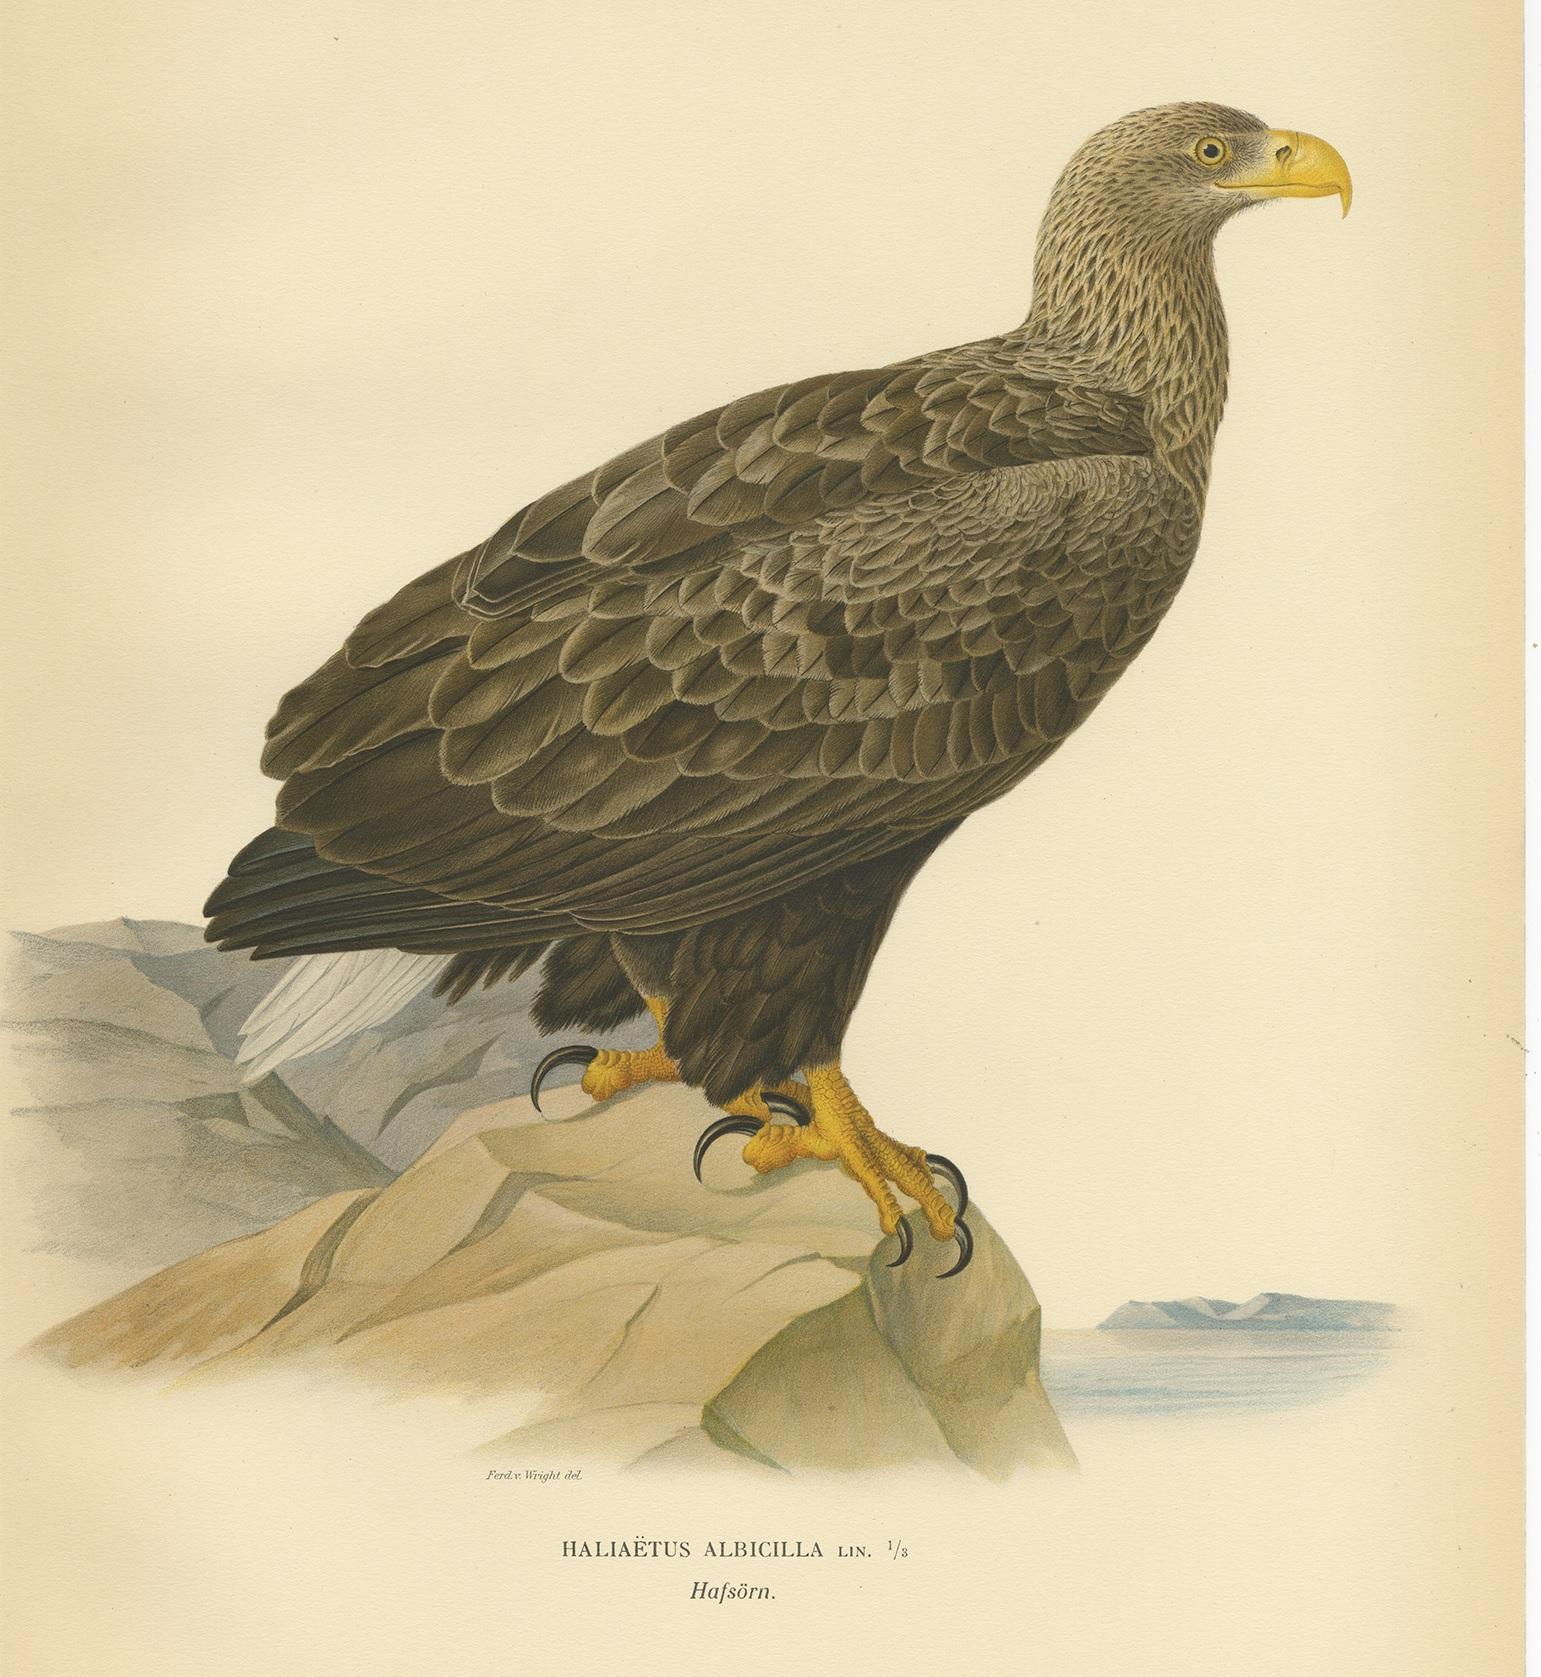 Antique bird print titled 'Haliaëtus Albicilla'. Old bird print depicting the white-tailed eagle. This print originates from 'Svenska Foglar Efter Naturen Och Pa Stenritade' by Magnus von Wright.